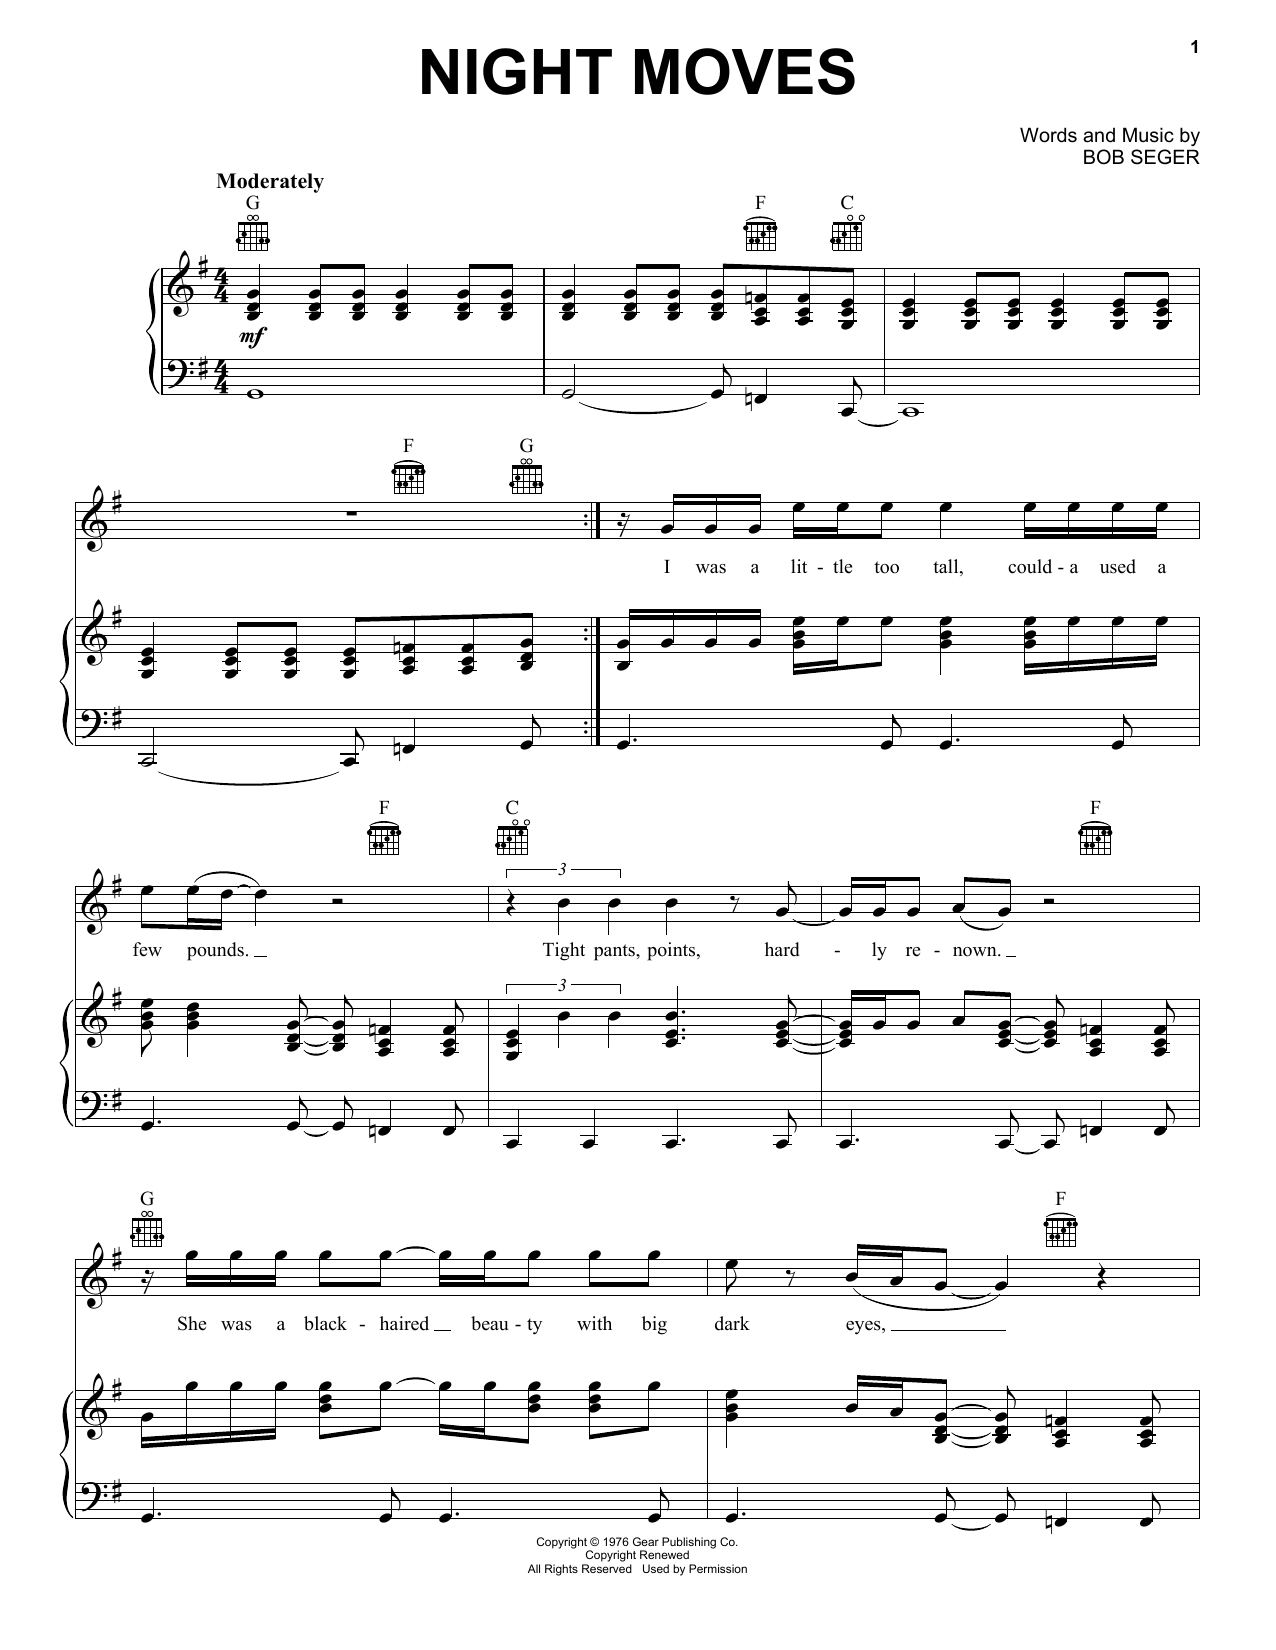 Bob Seger Night Moves Sheet Music Notes & Chords for Melody Line, Lyrics & Chords - Download or Print PDF